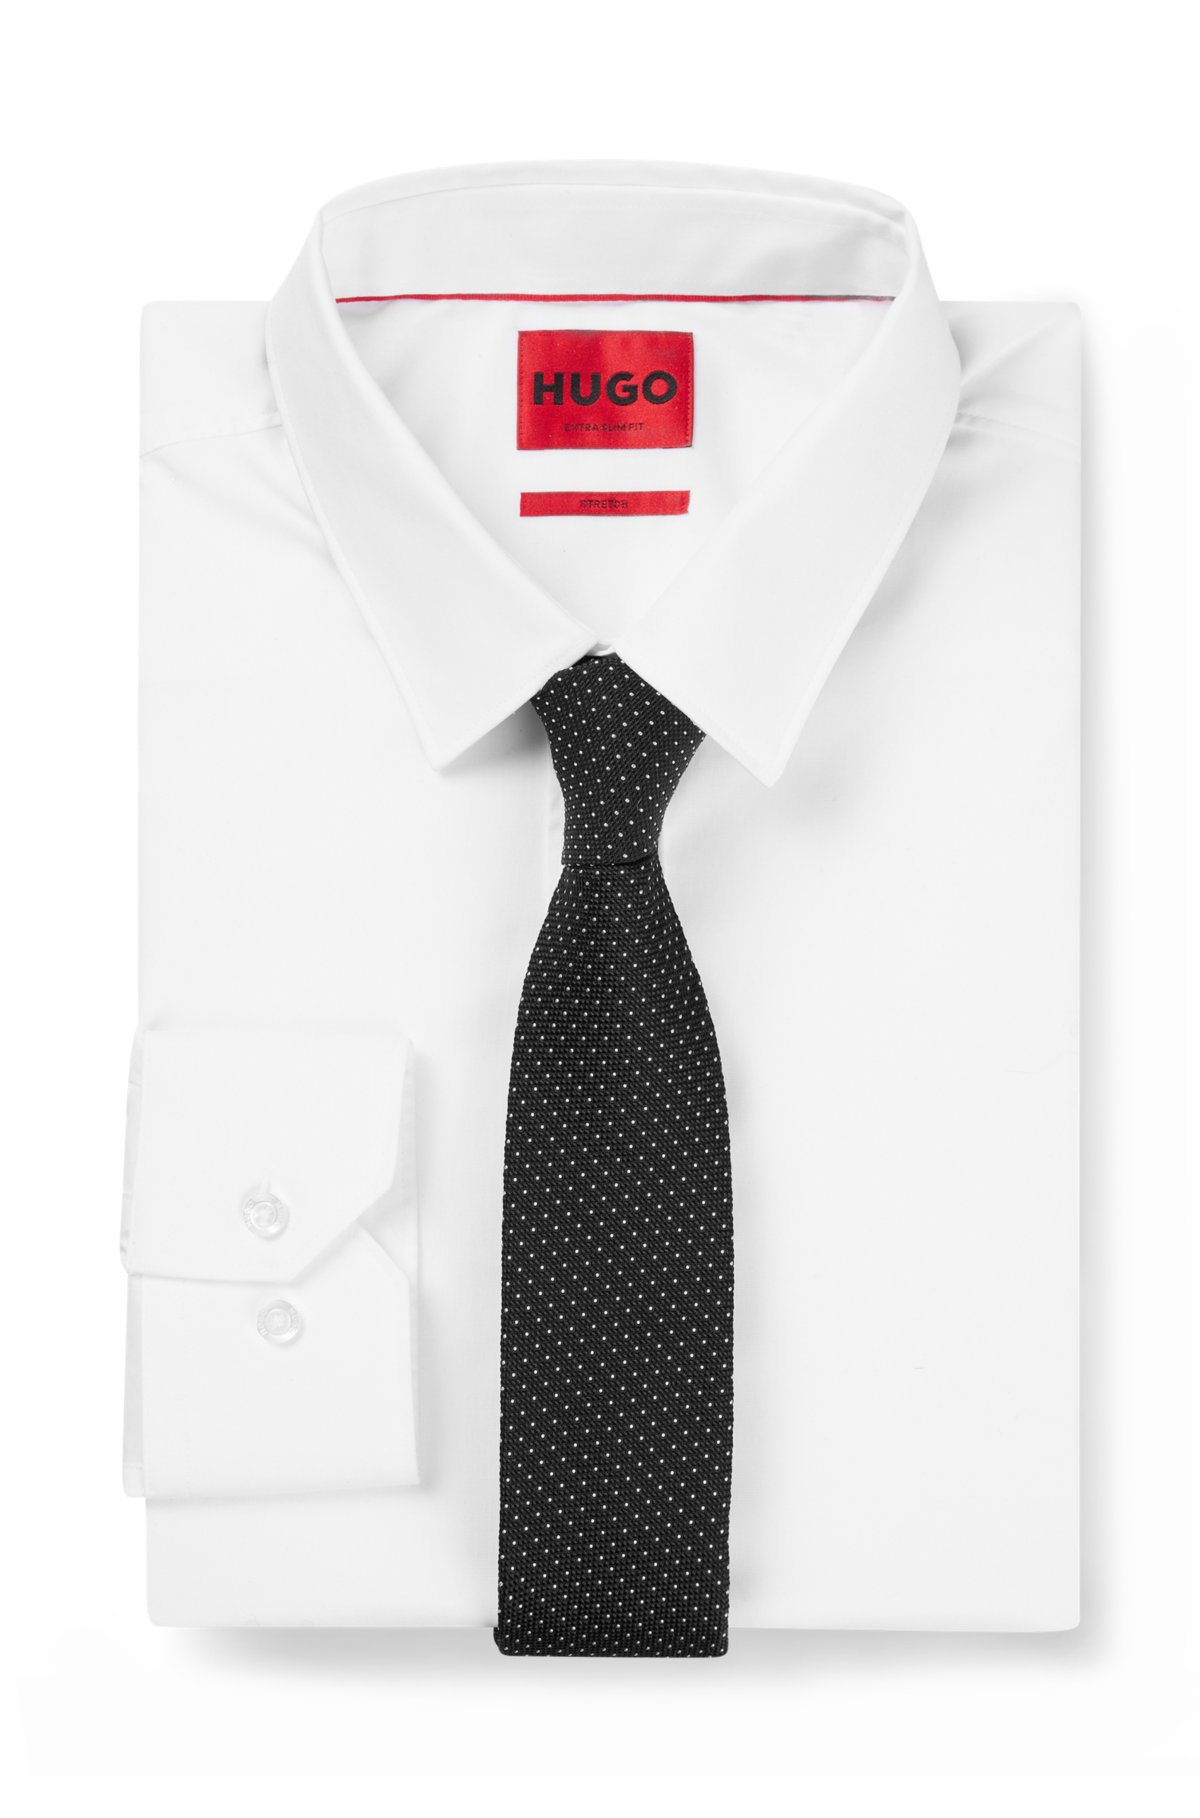 HUGO mit reiner Seide Jacquard-Muster - aus Krawatte